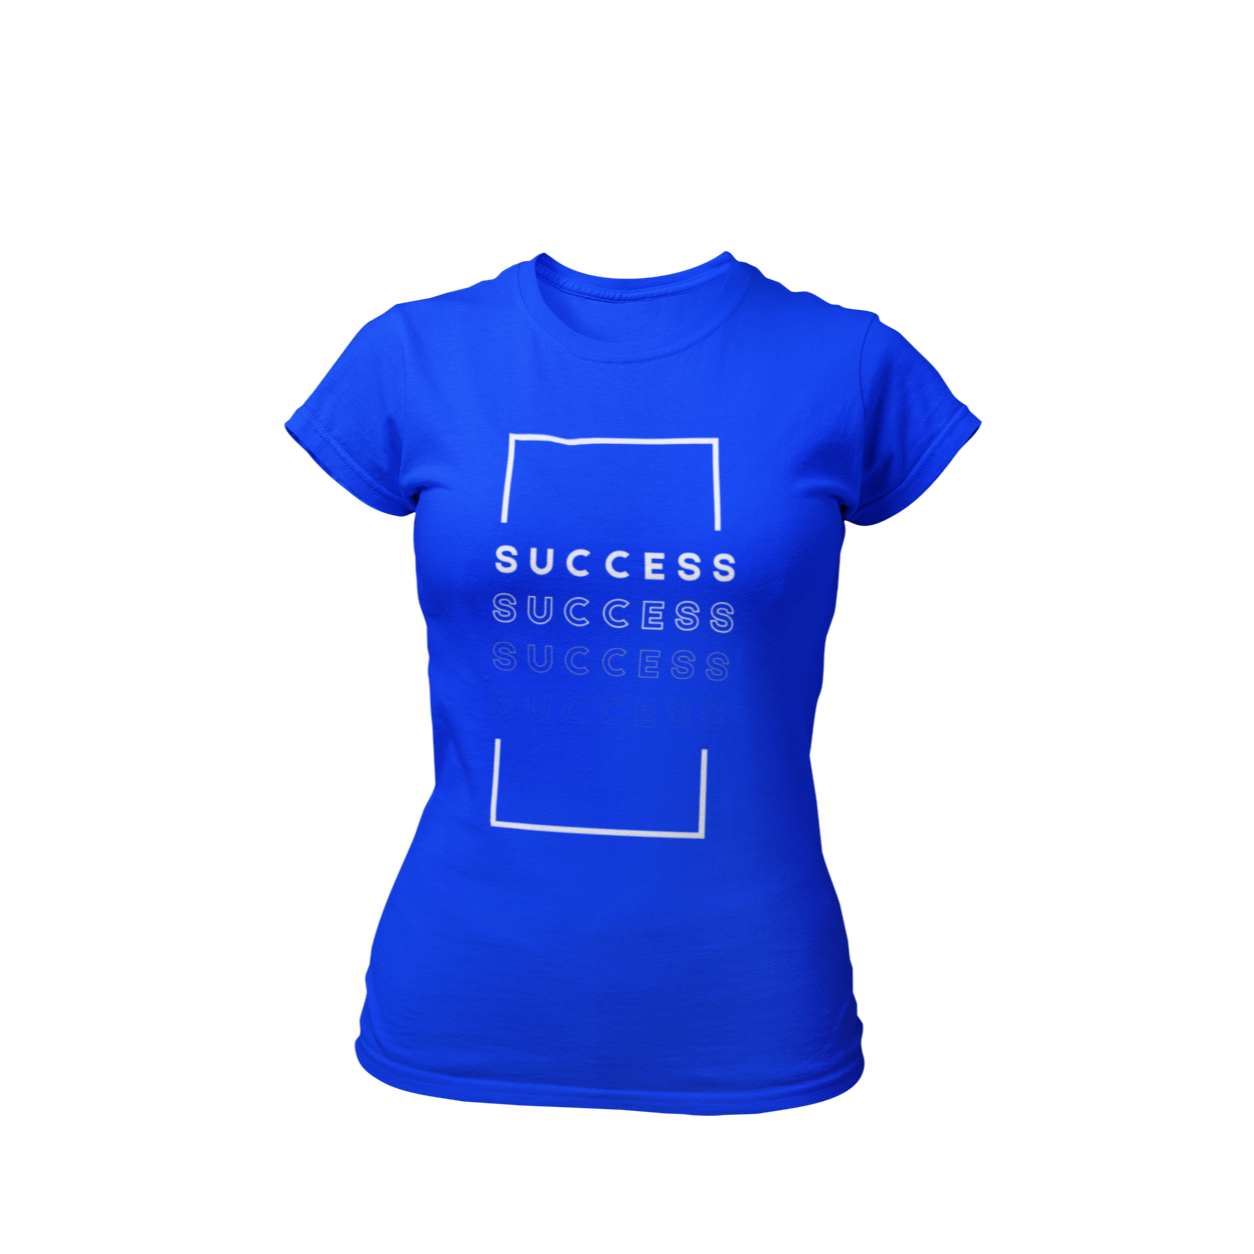 Black Women's Layered Success Shirt by Made Inc 